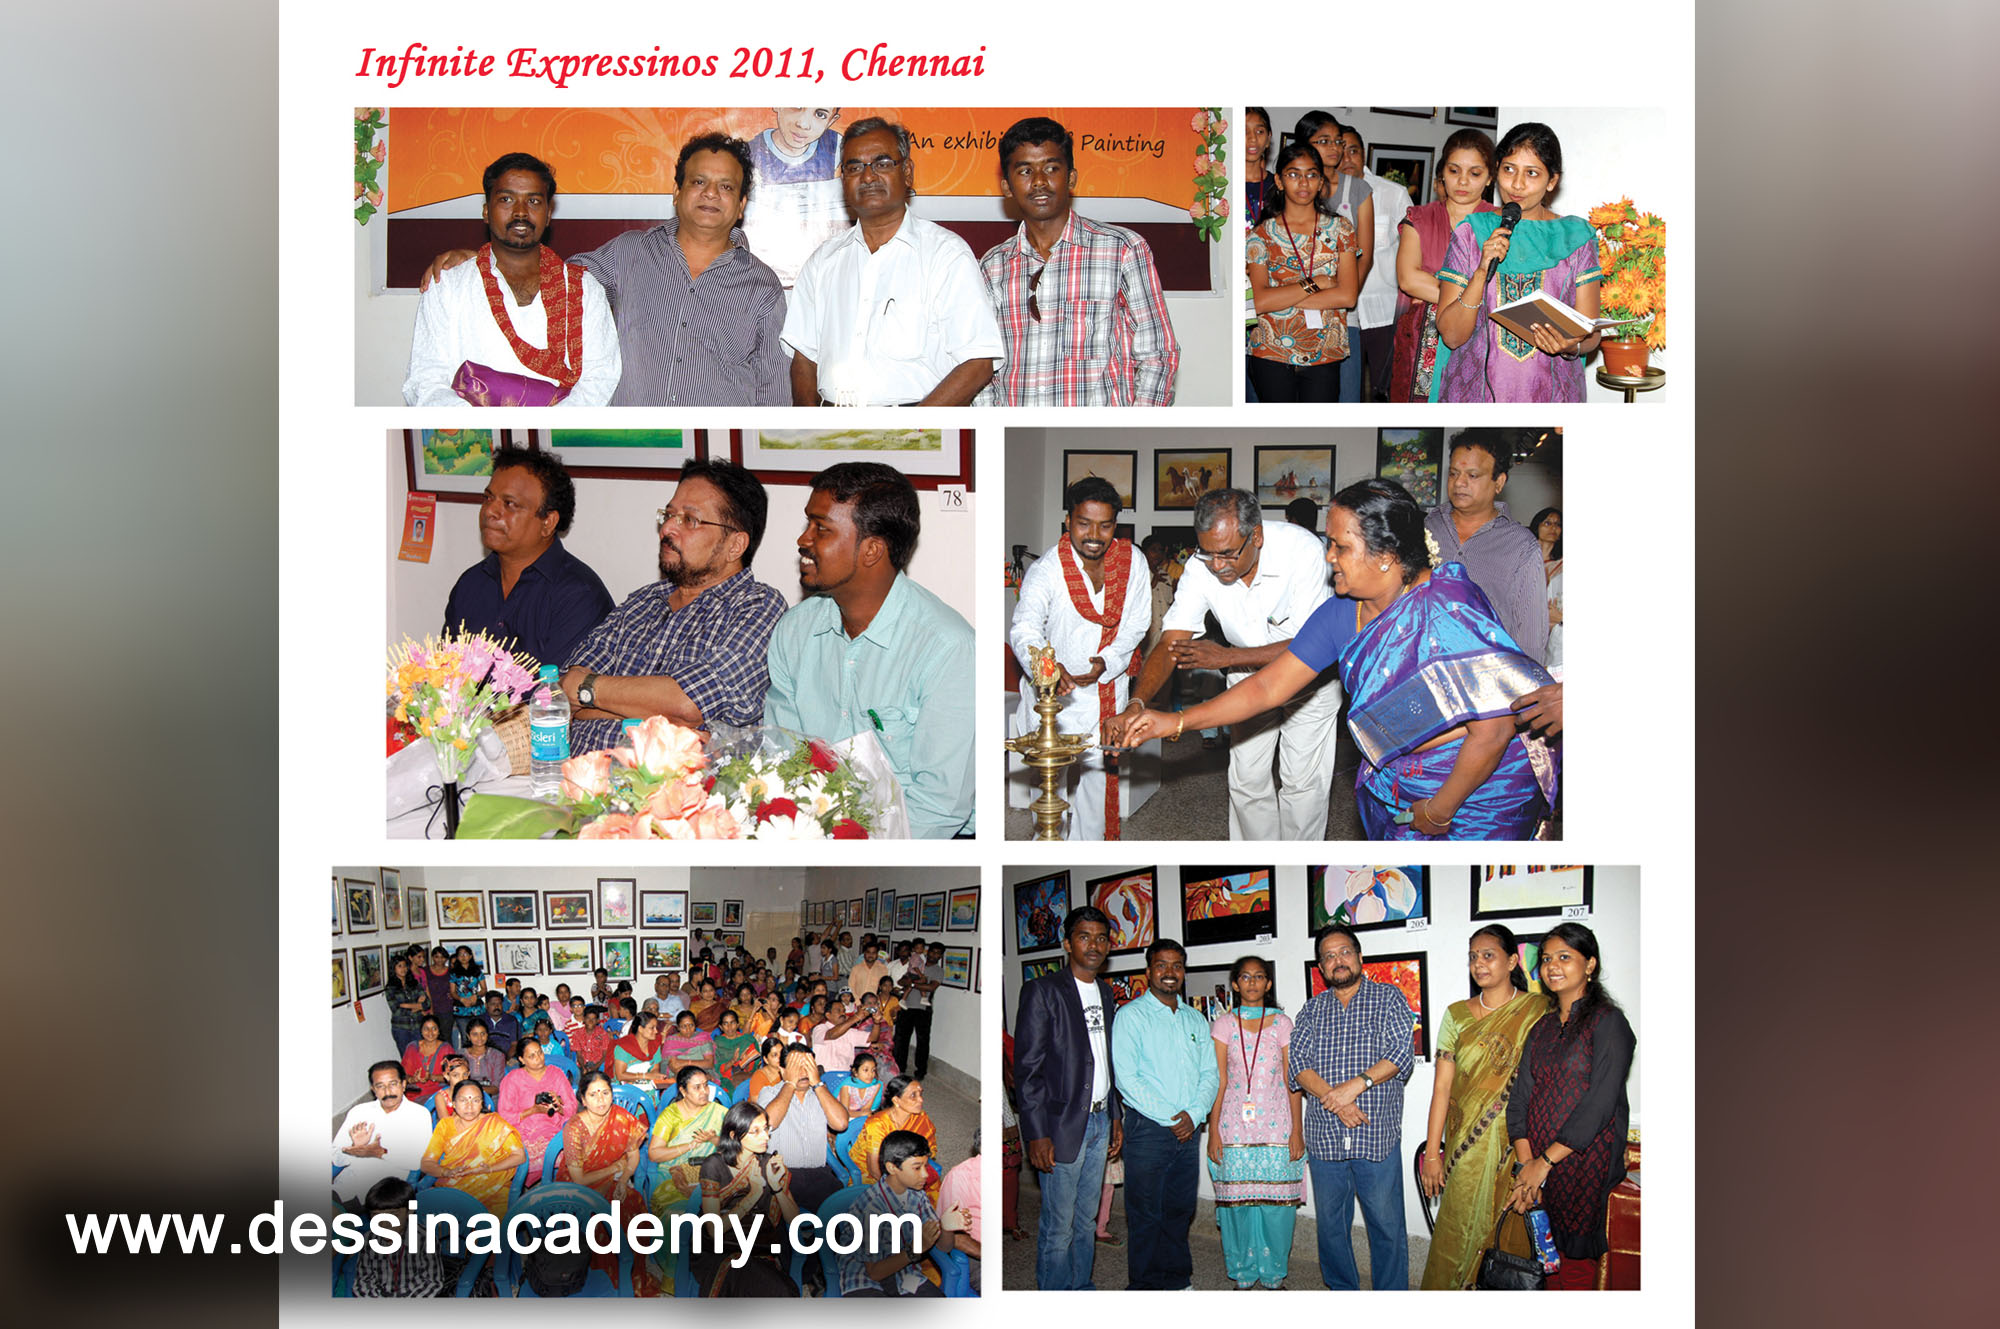 Dessin School of arts Event Gallery 5, Painting classes in ThalamburDessin School of Arts